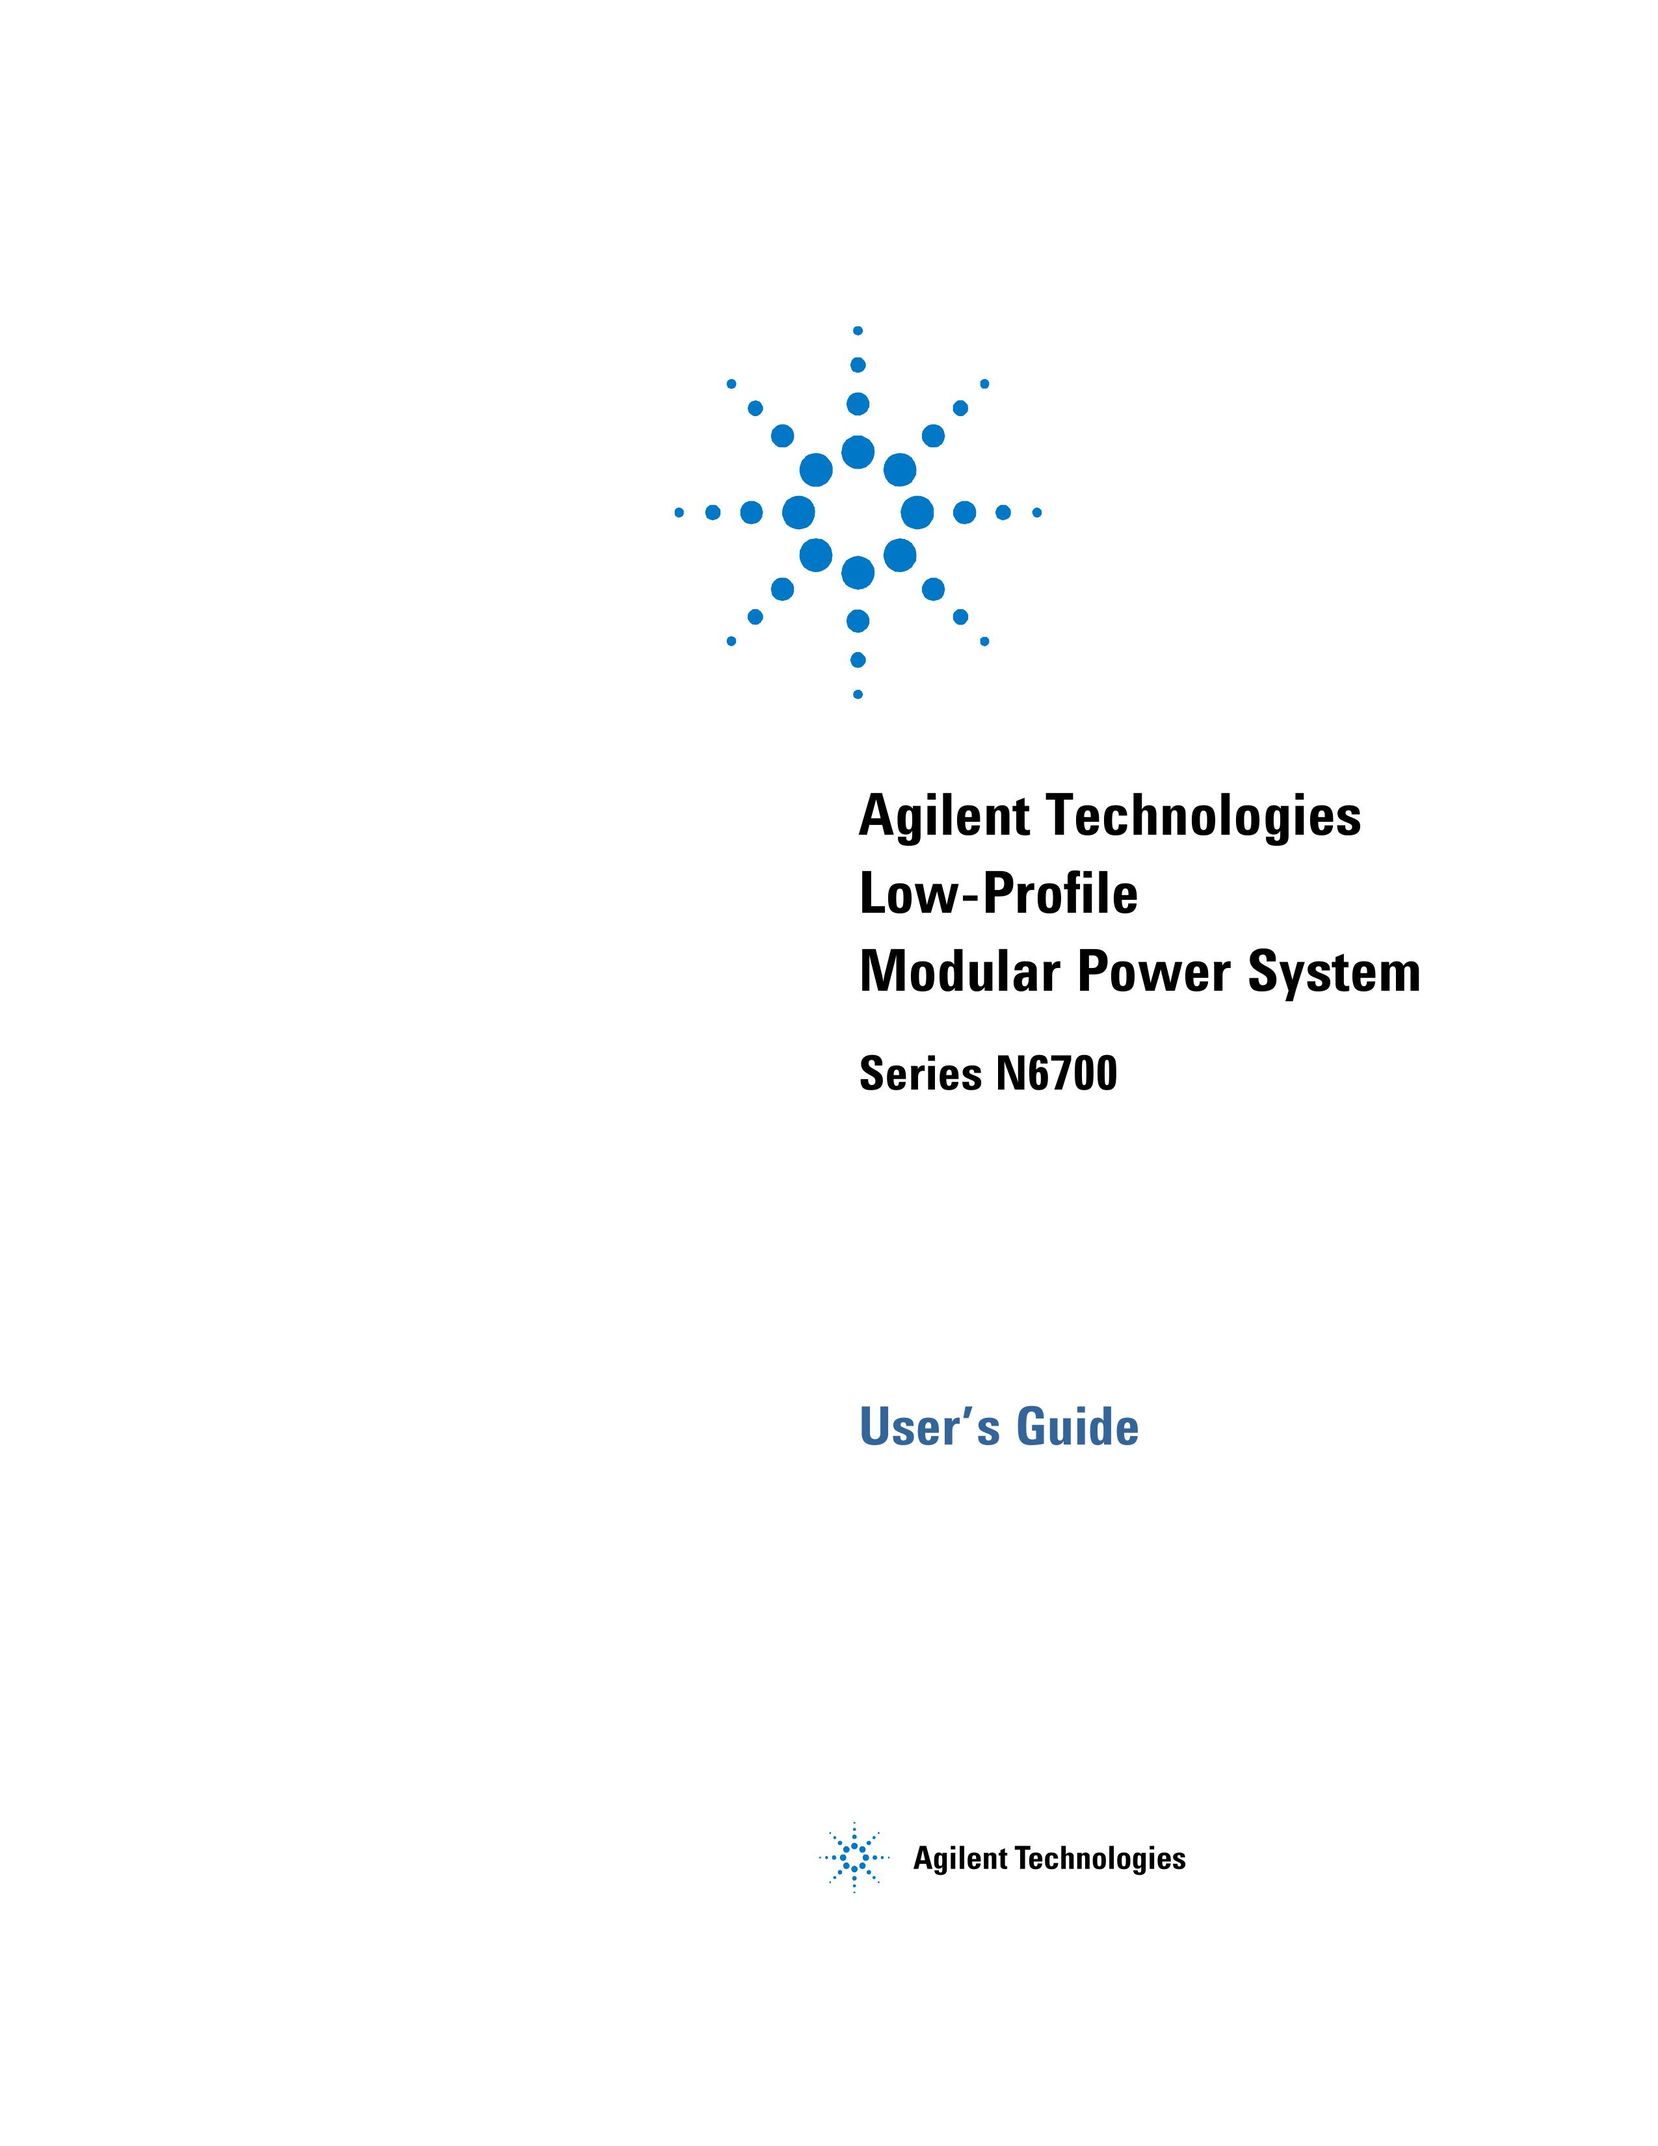 Agilent Technologies N6700 Welding System User Manual